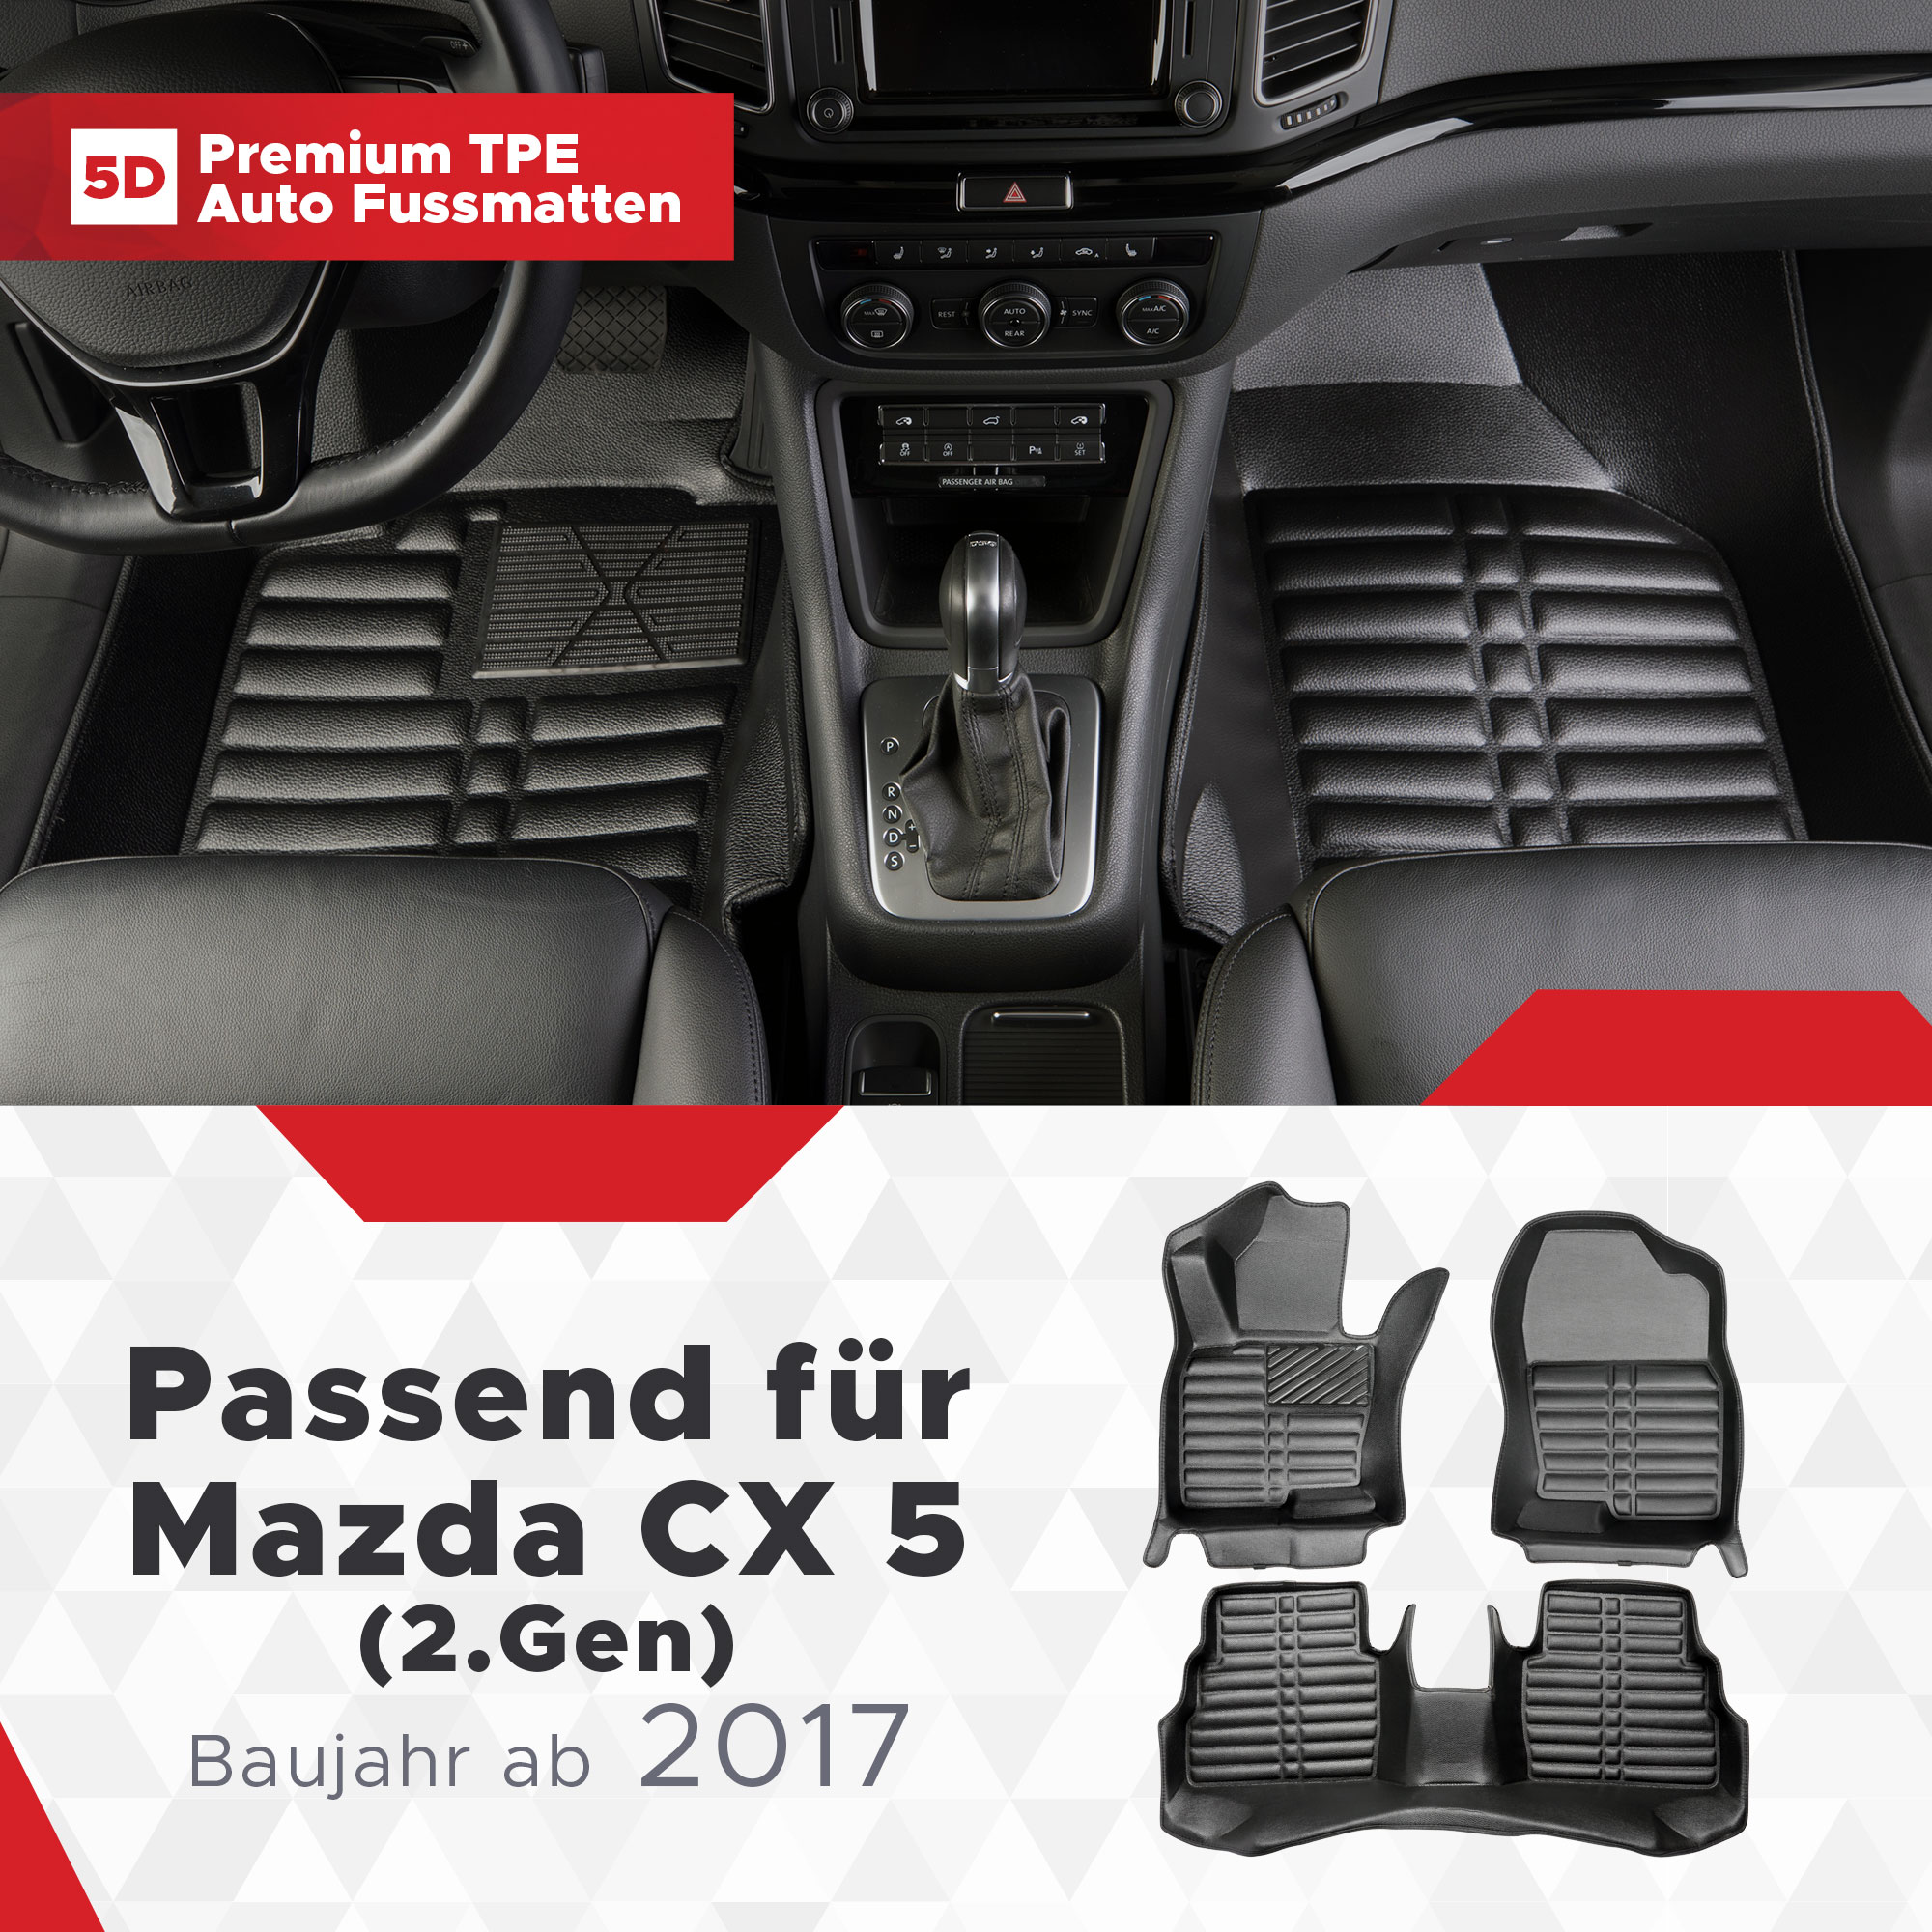 5D Mazda CX 5 (2.Gen) Fussmatten Bj ab 2017 TPE | Automatten